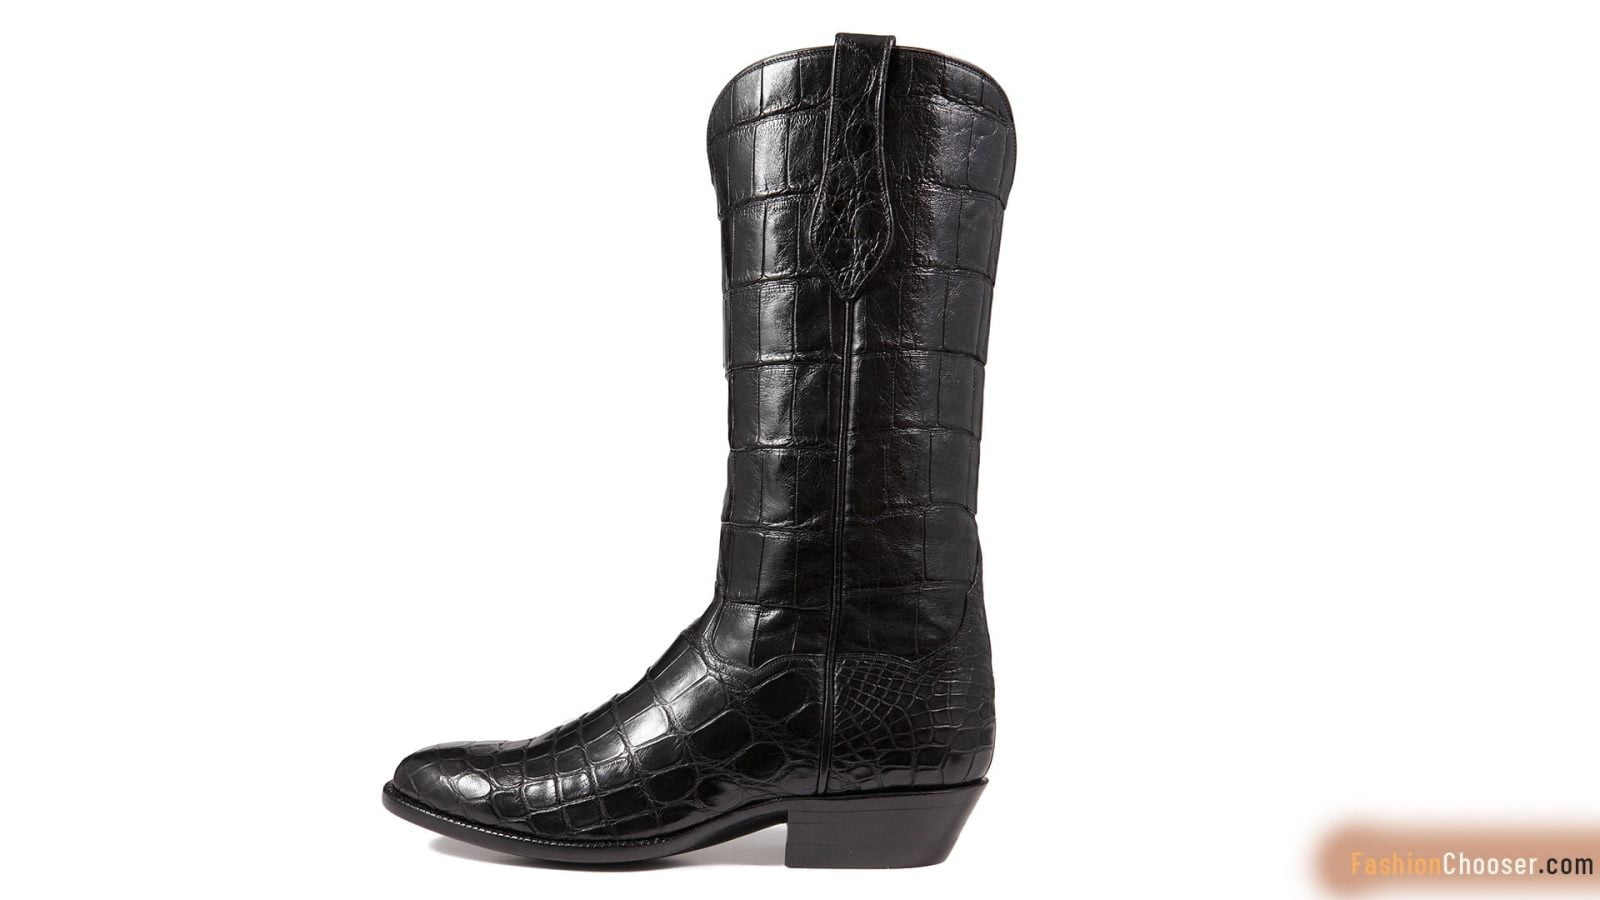 j.b. hill boots - comfortable cowboy boots brand